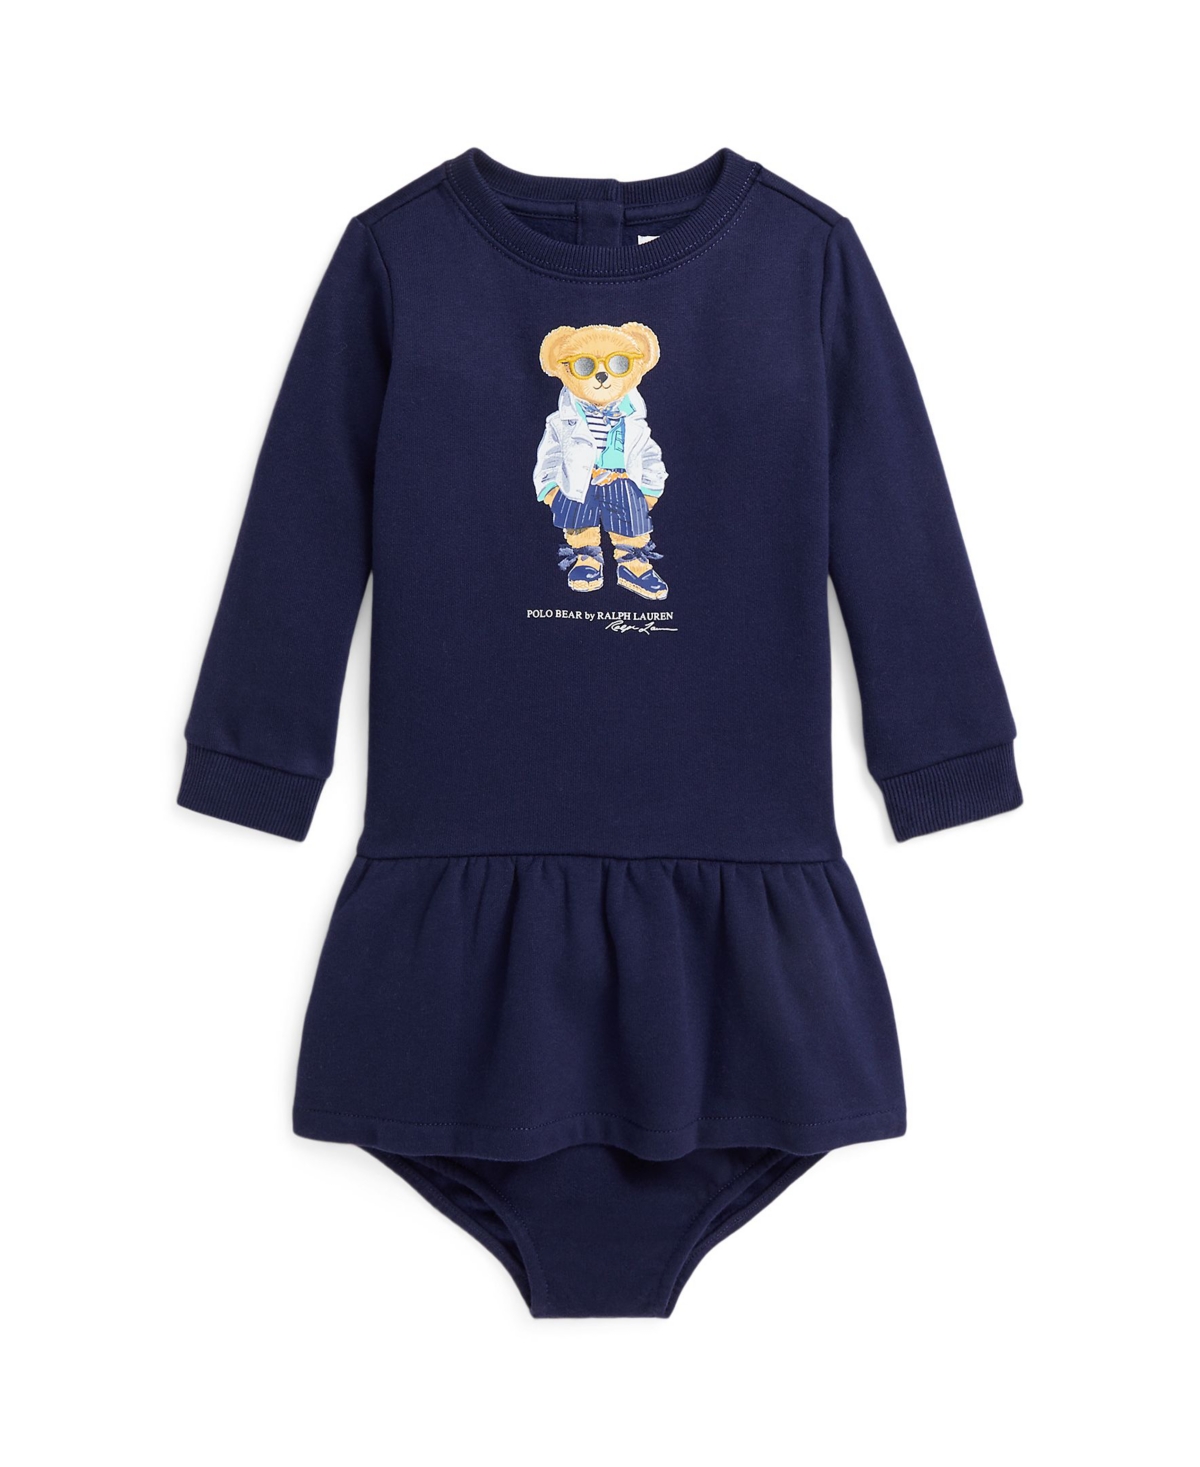 Polo Ralph Lauren Baby Girls Polo Bear Fleece Dress And Bloomer Set In Newport Navy